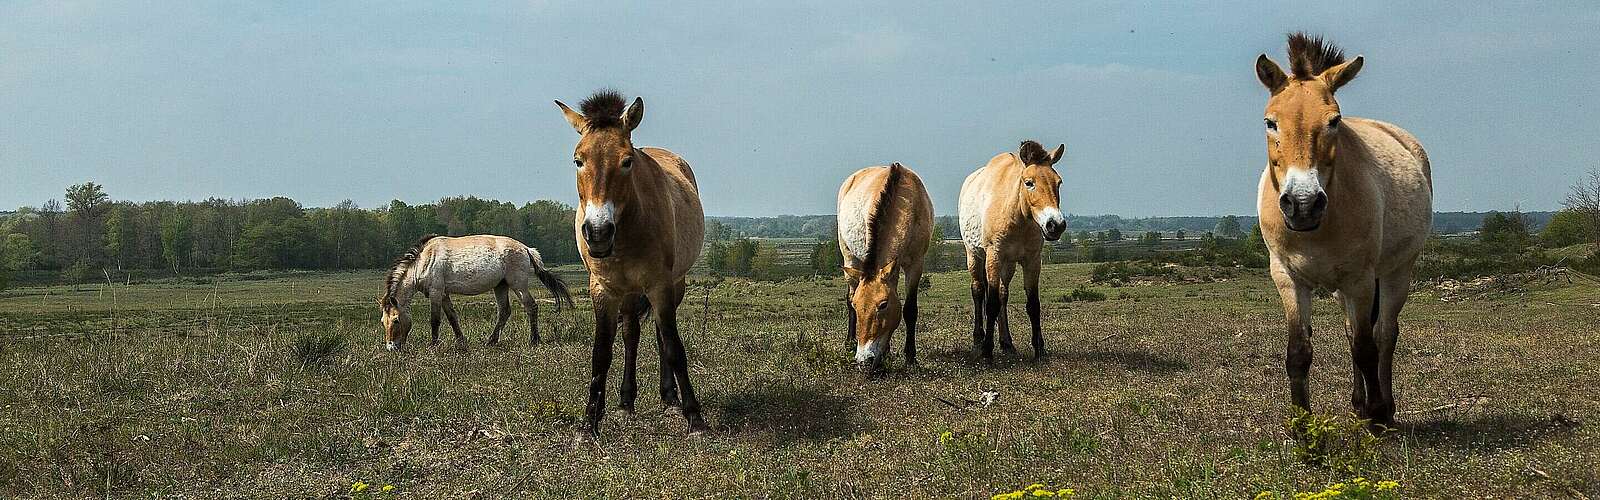 Przewalski-Pferde in Sielmanns Naturlandschaft Döberitzer Heide,
        
    

        Foto: Fotograf / Lizenz - Media Import/Steffen Lehmann